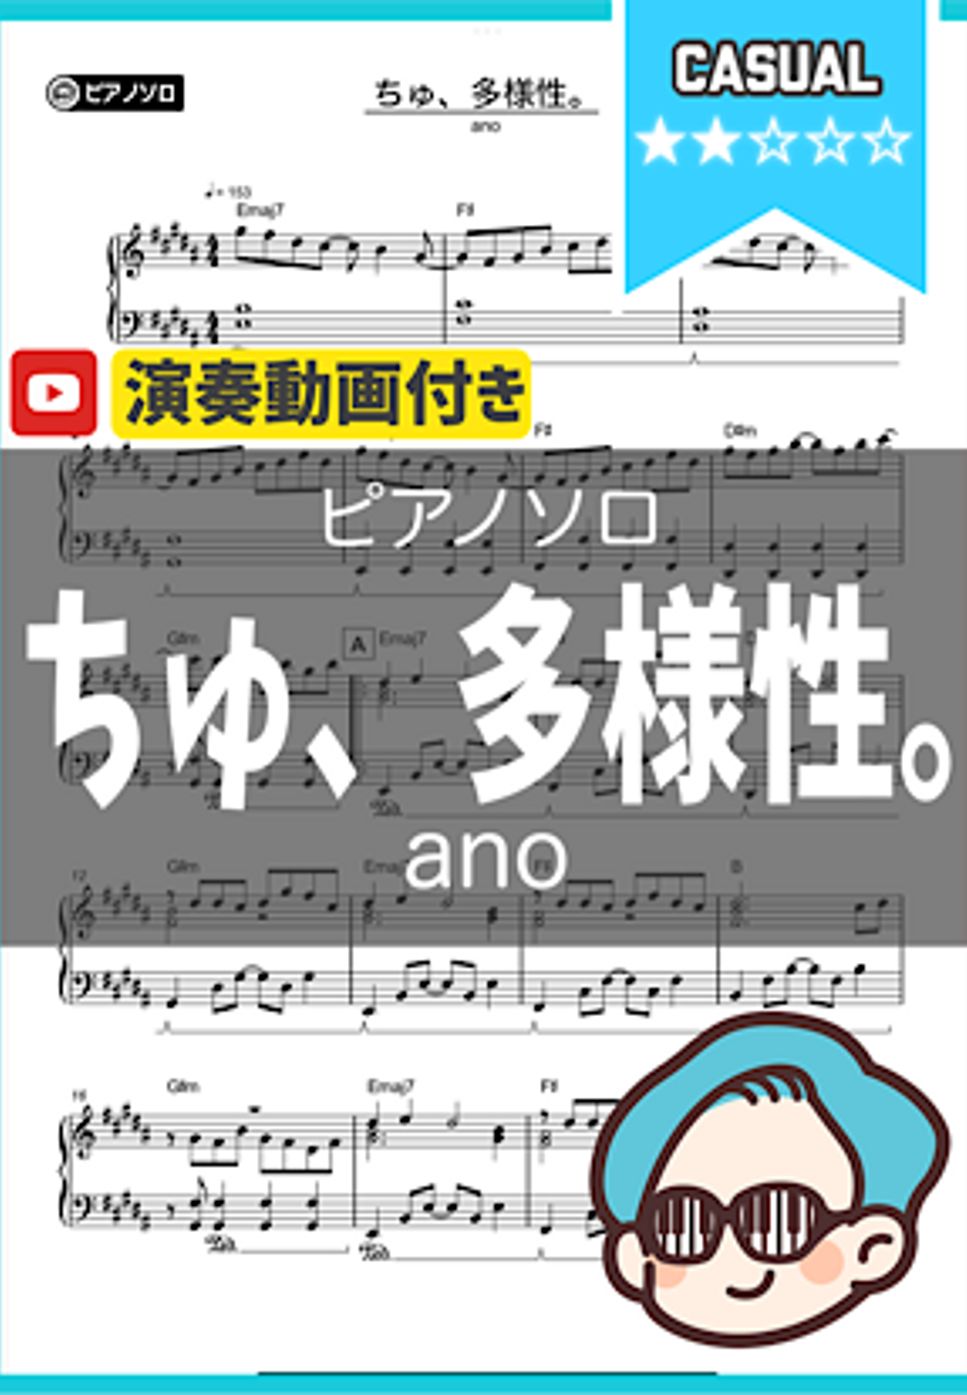 ano - ちゅ、多様性。 by シータピアノ